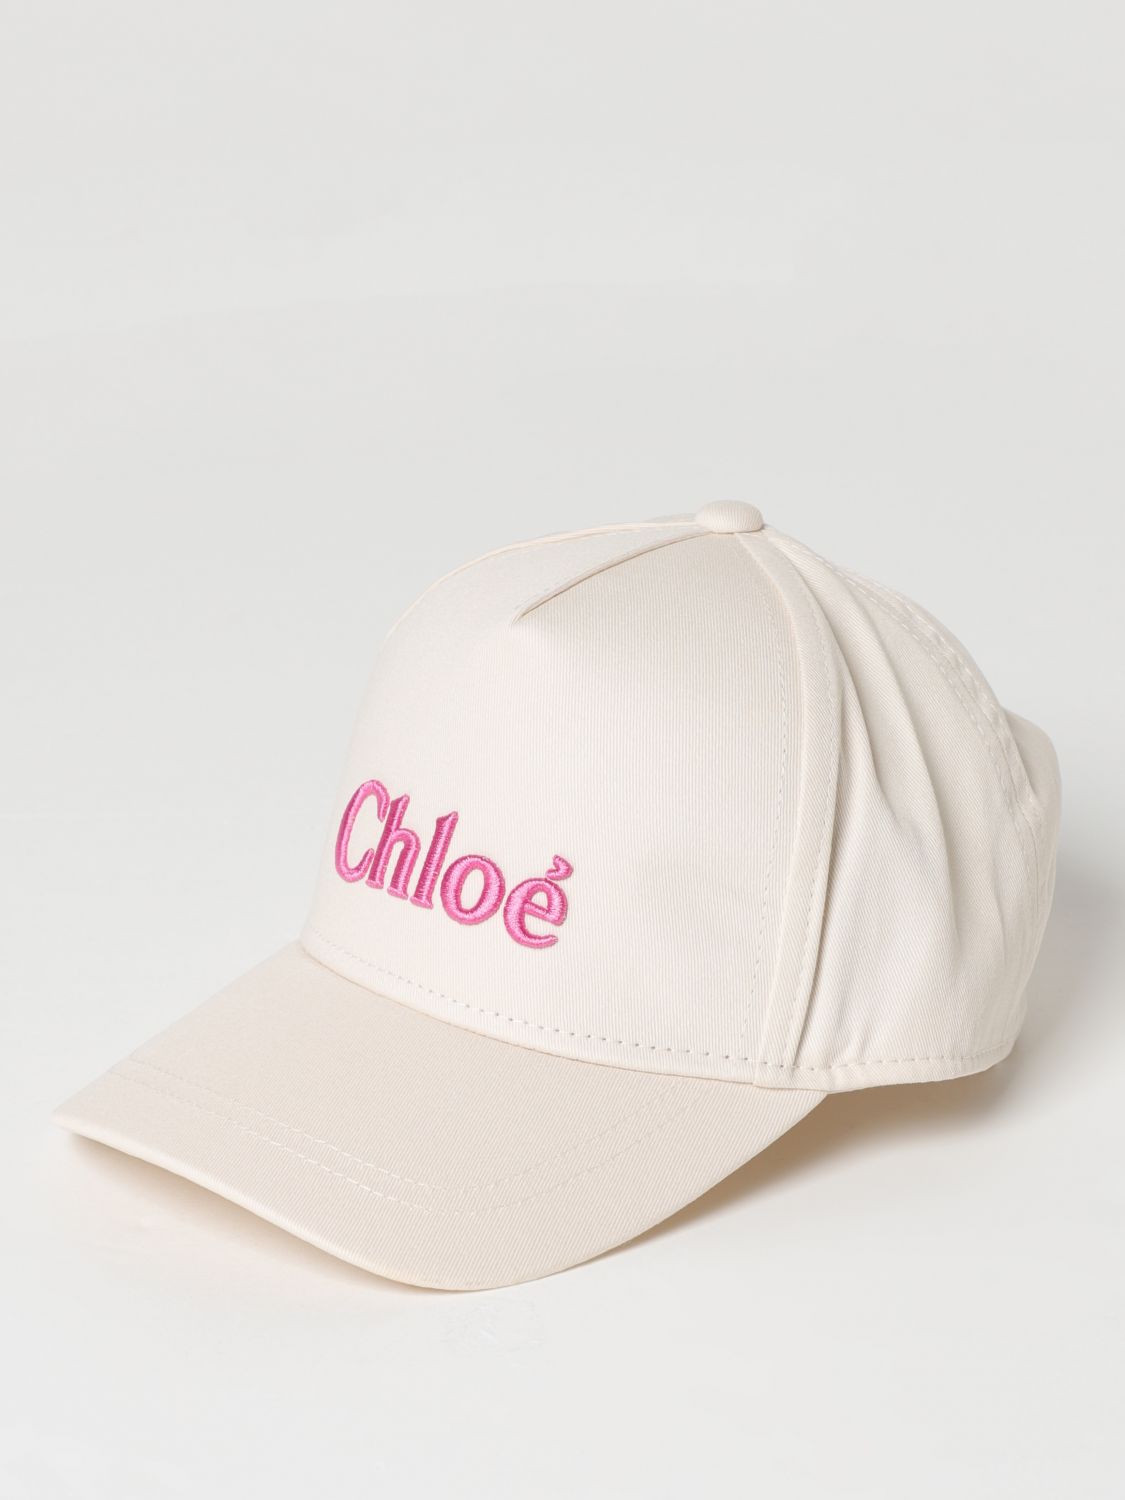 Chloé Girls' Hats  Kids Colour White